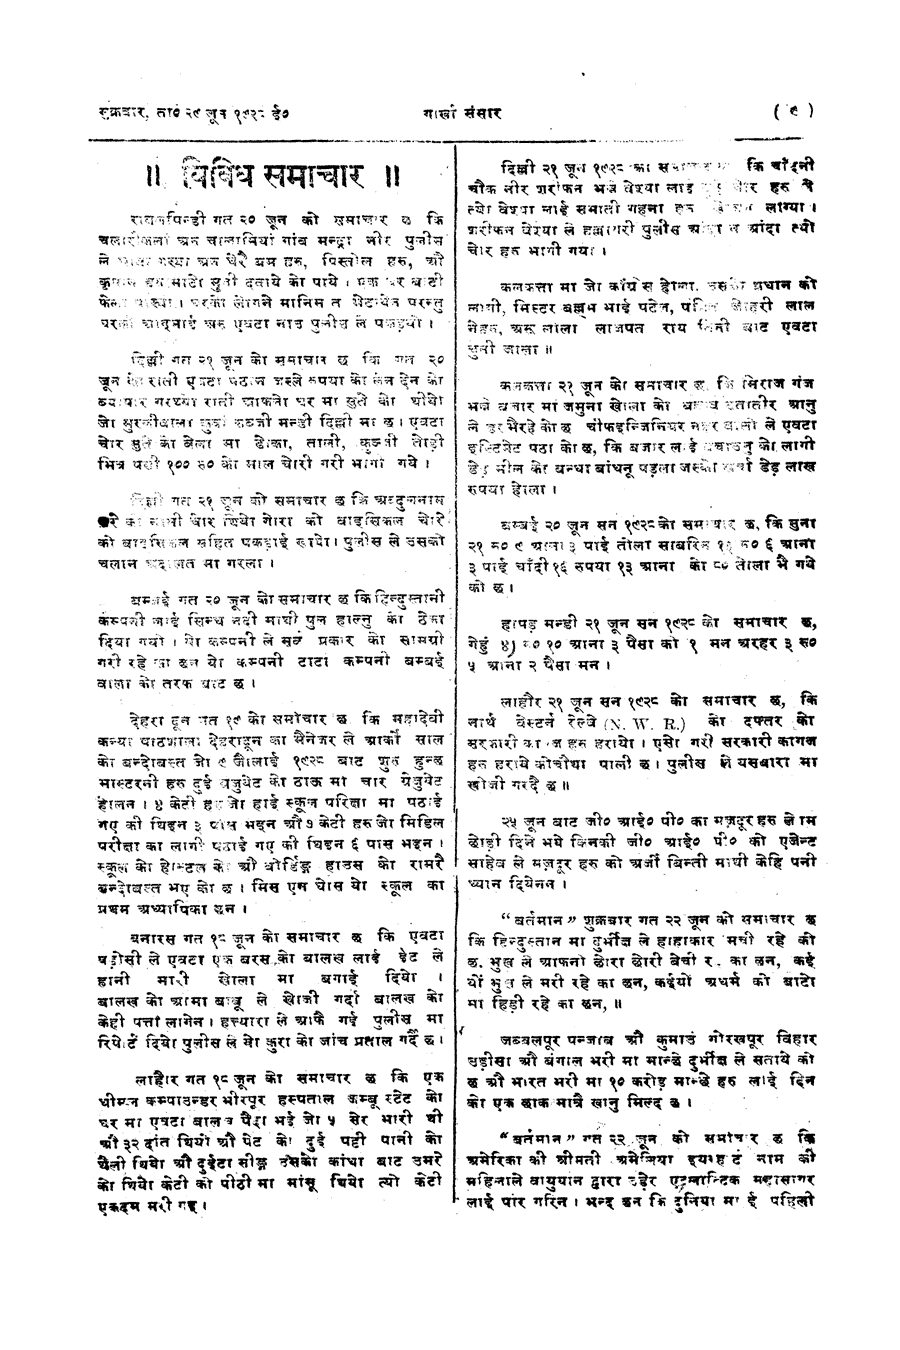 Gorkha Sansar, 29 June 1928, page 9